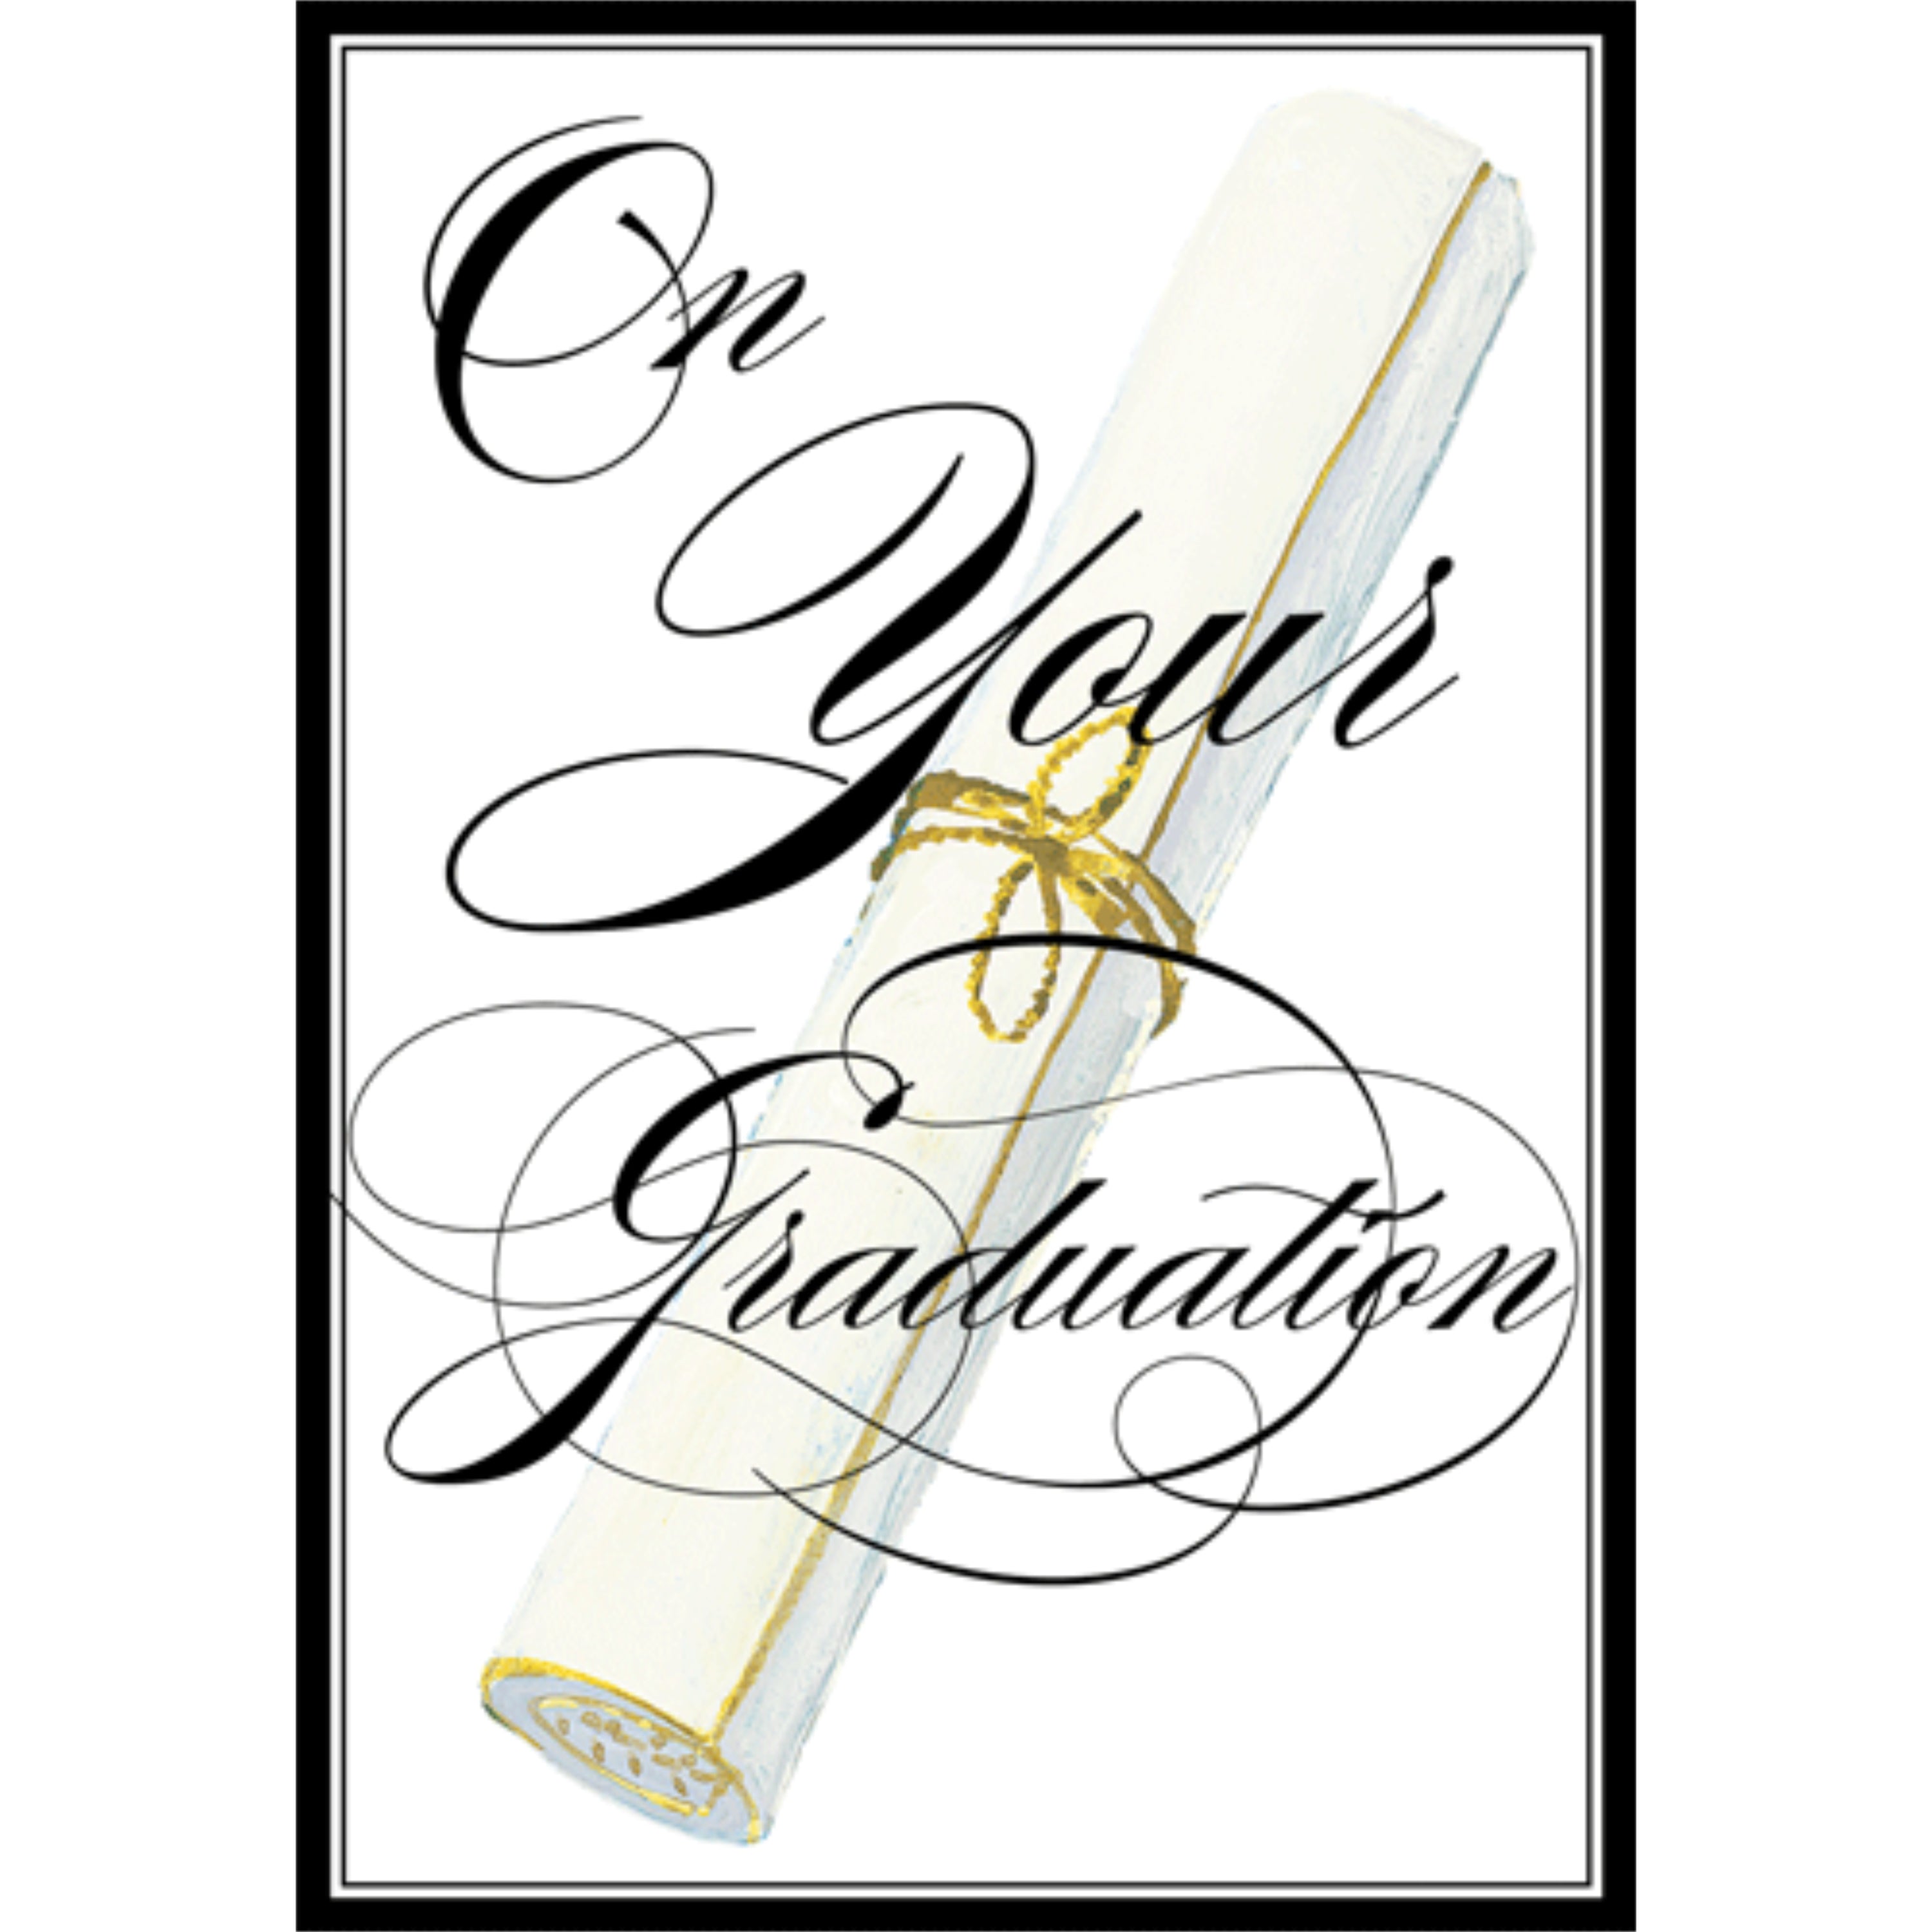 Caspari – On Your Graduation Foil Card – 1 Card & 1 Envelope